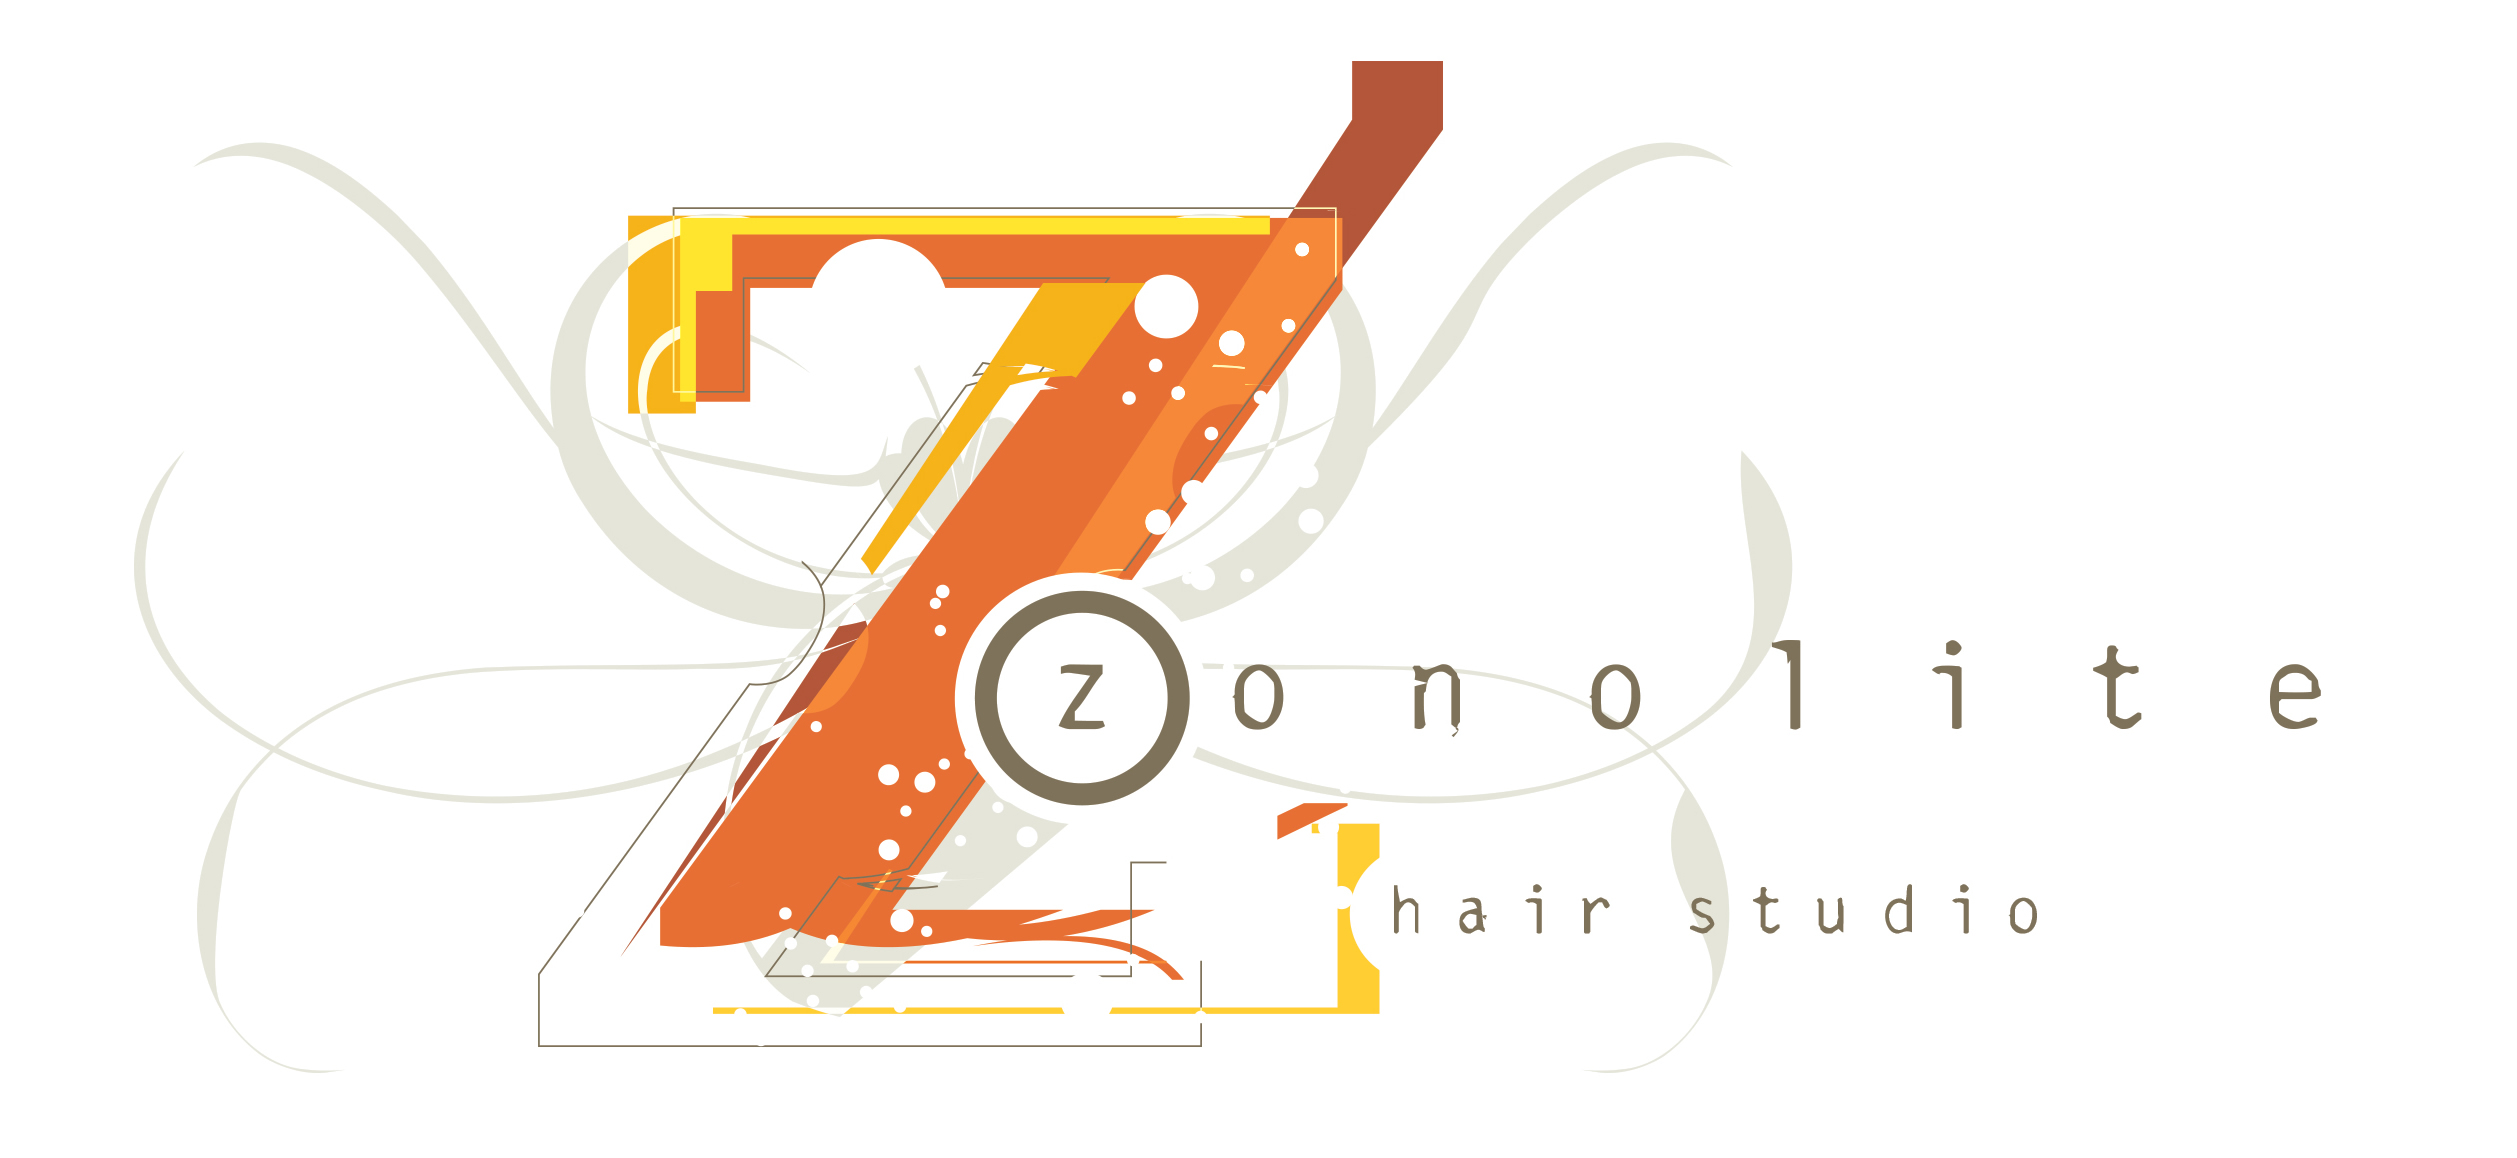 Zonolite Hair Studio - Atlanta Georgia